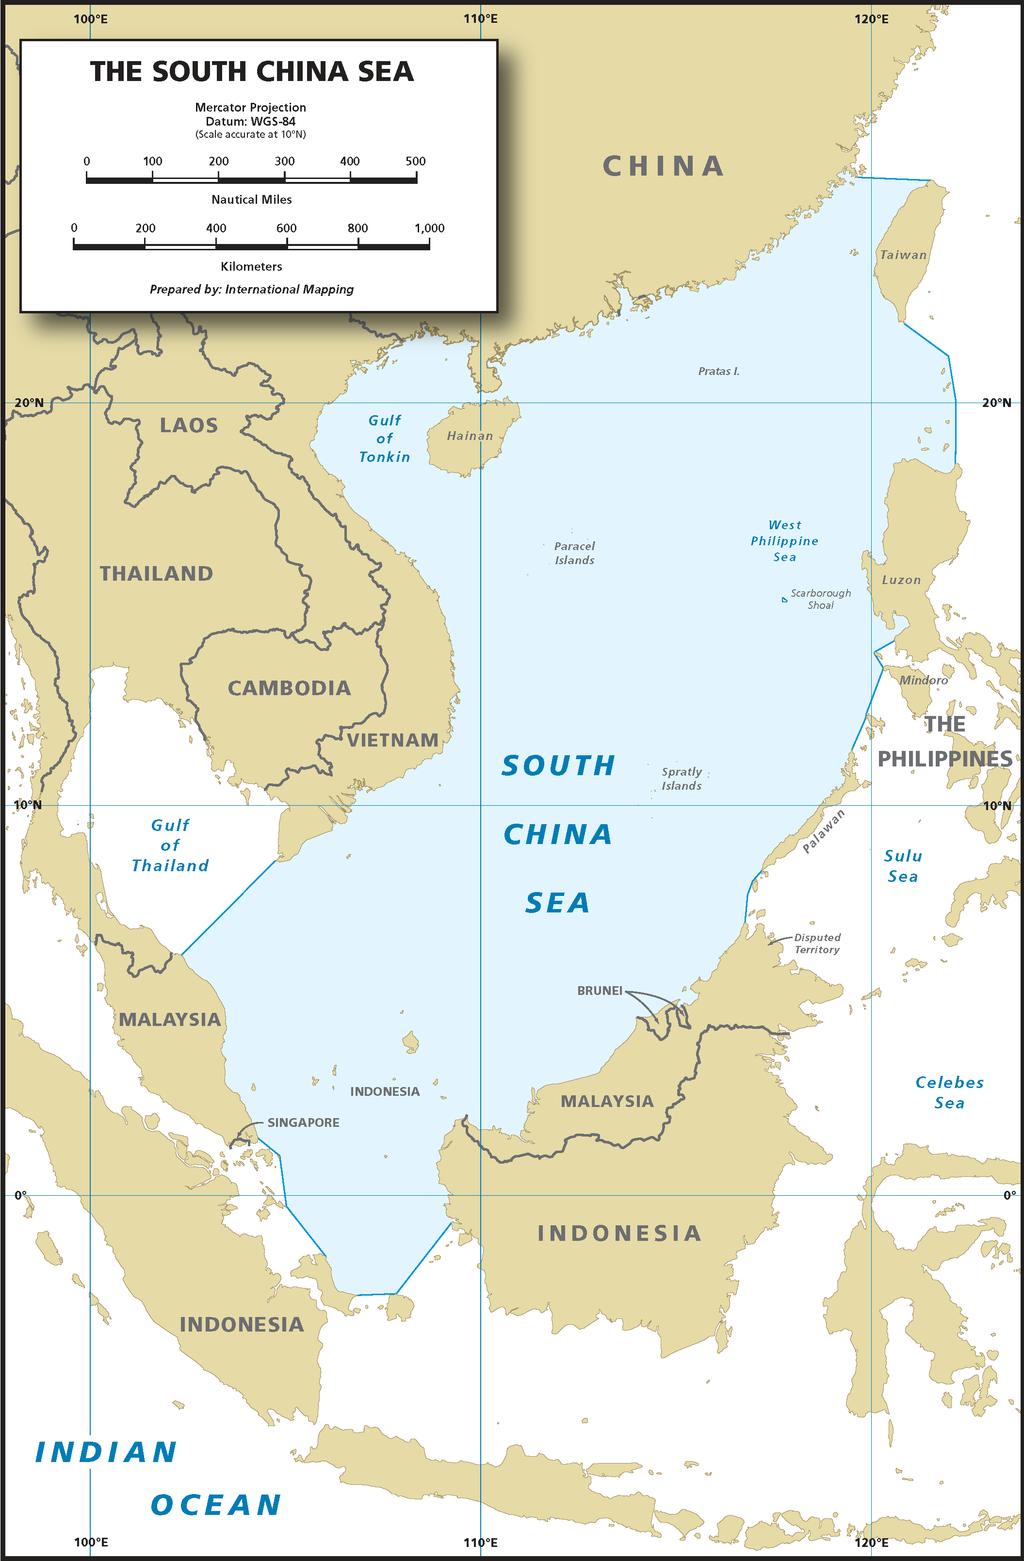 Figure 1: The South China